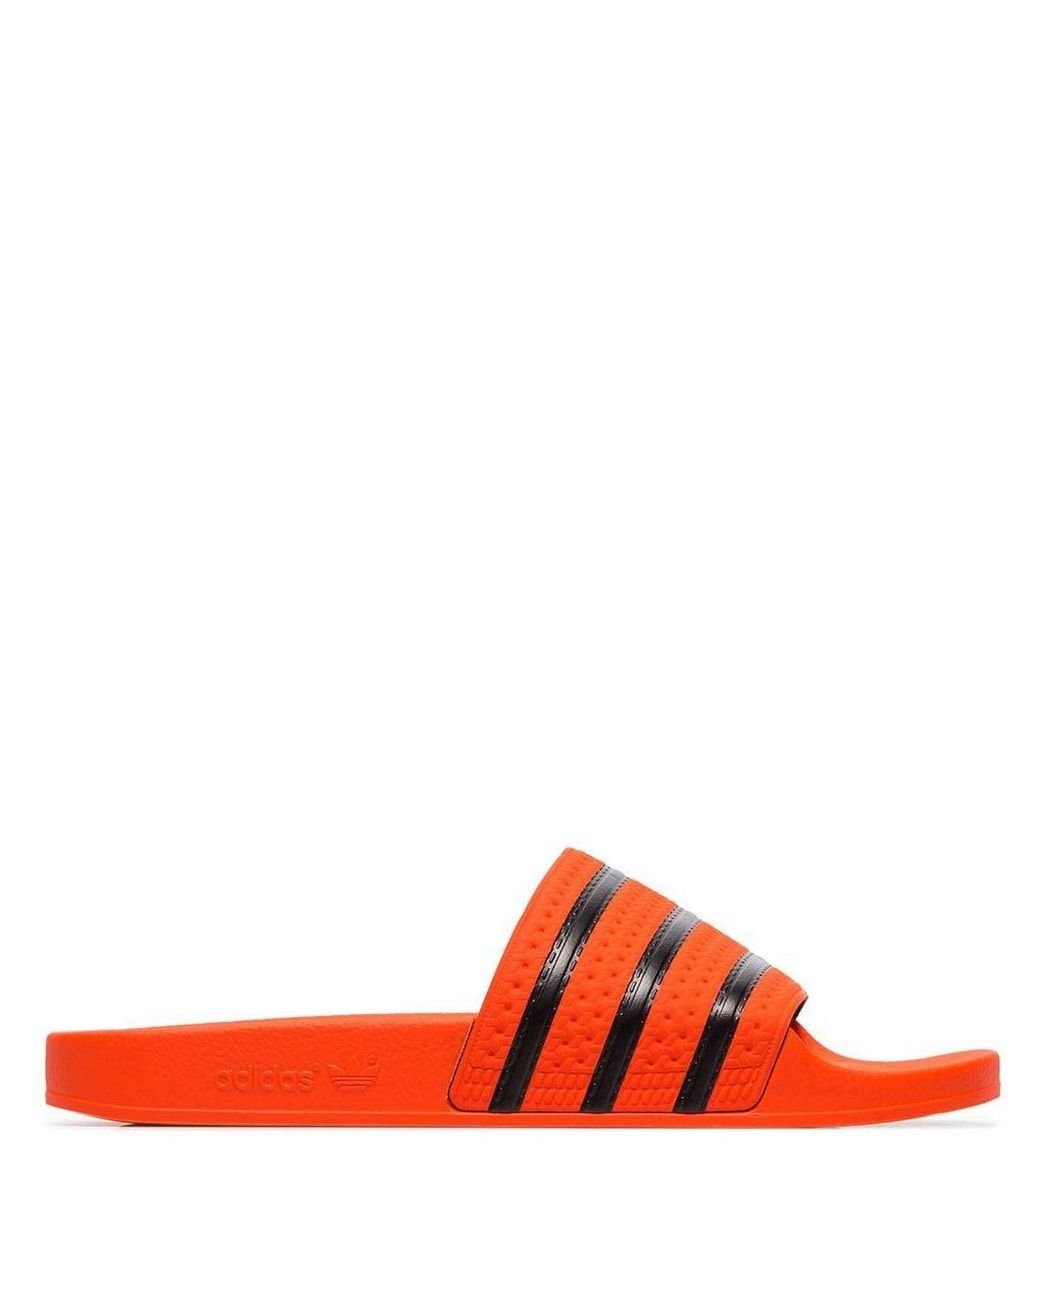 Nathaniel Ward Outlook Razernij adidas Oranje Adilette Slippers Van Rubber voor heren | Lyst NL